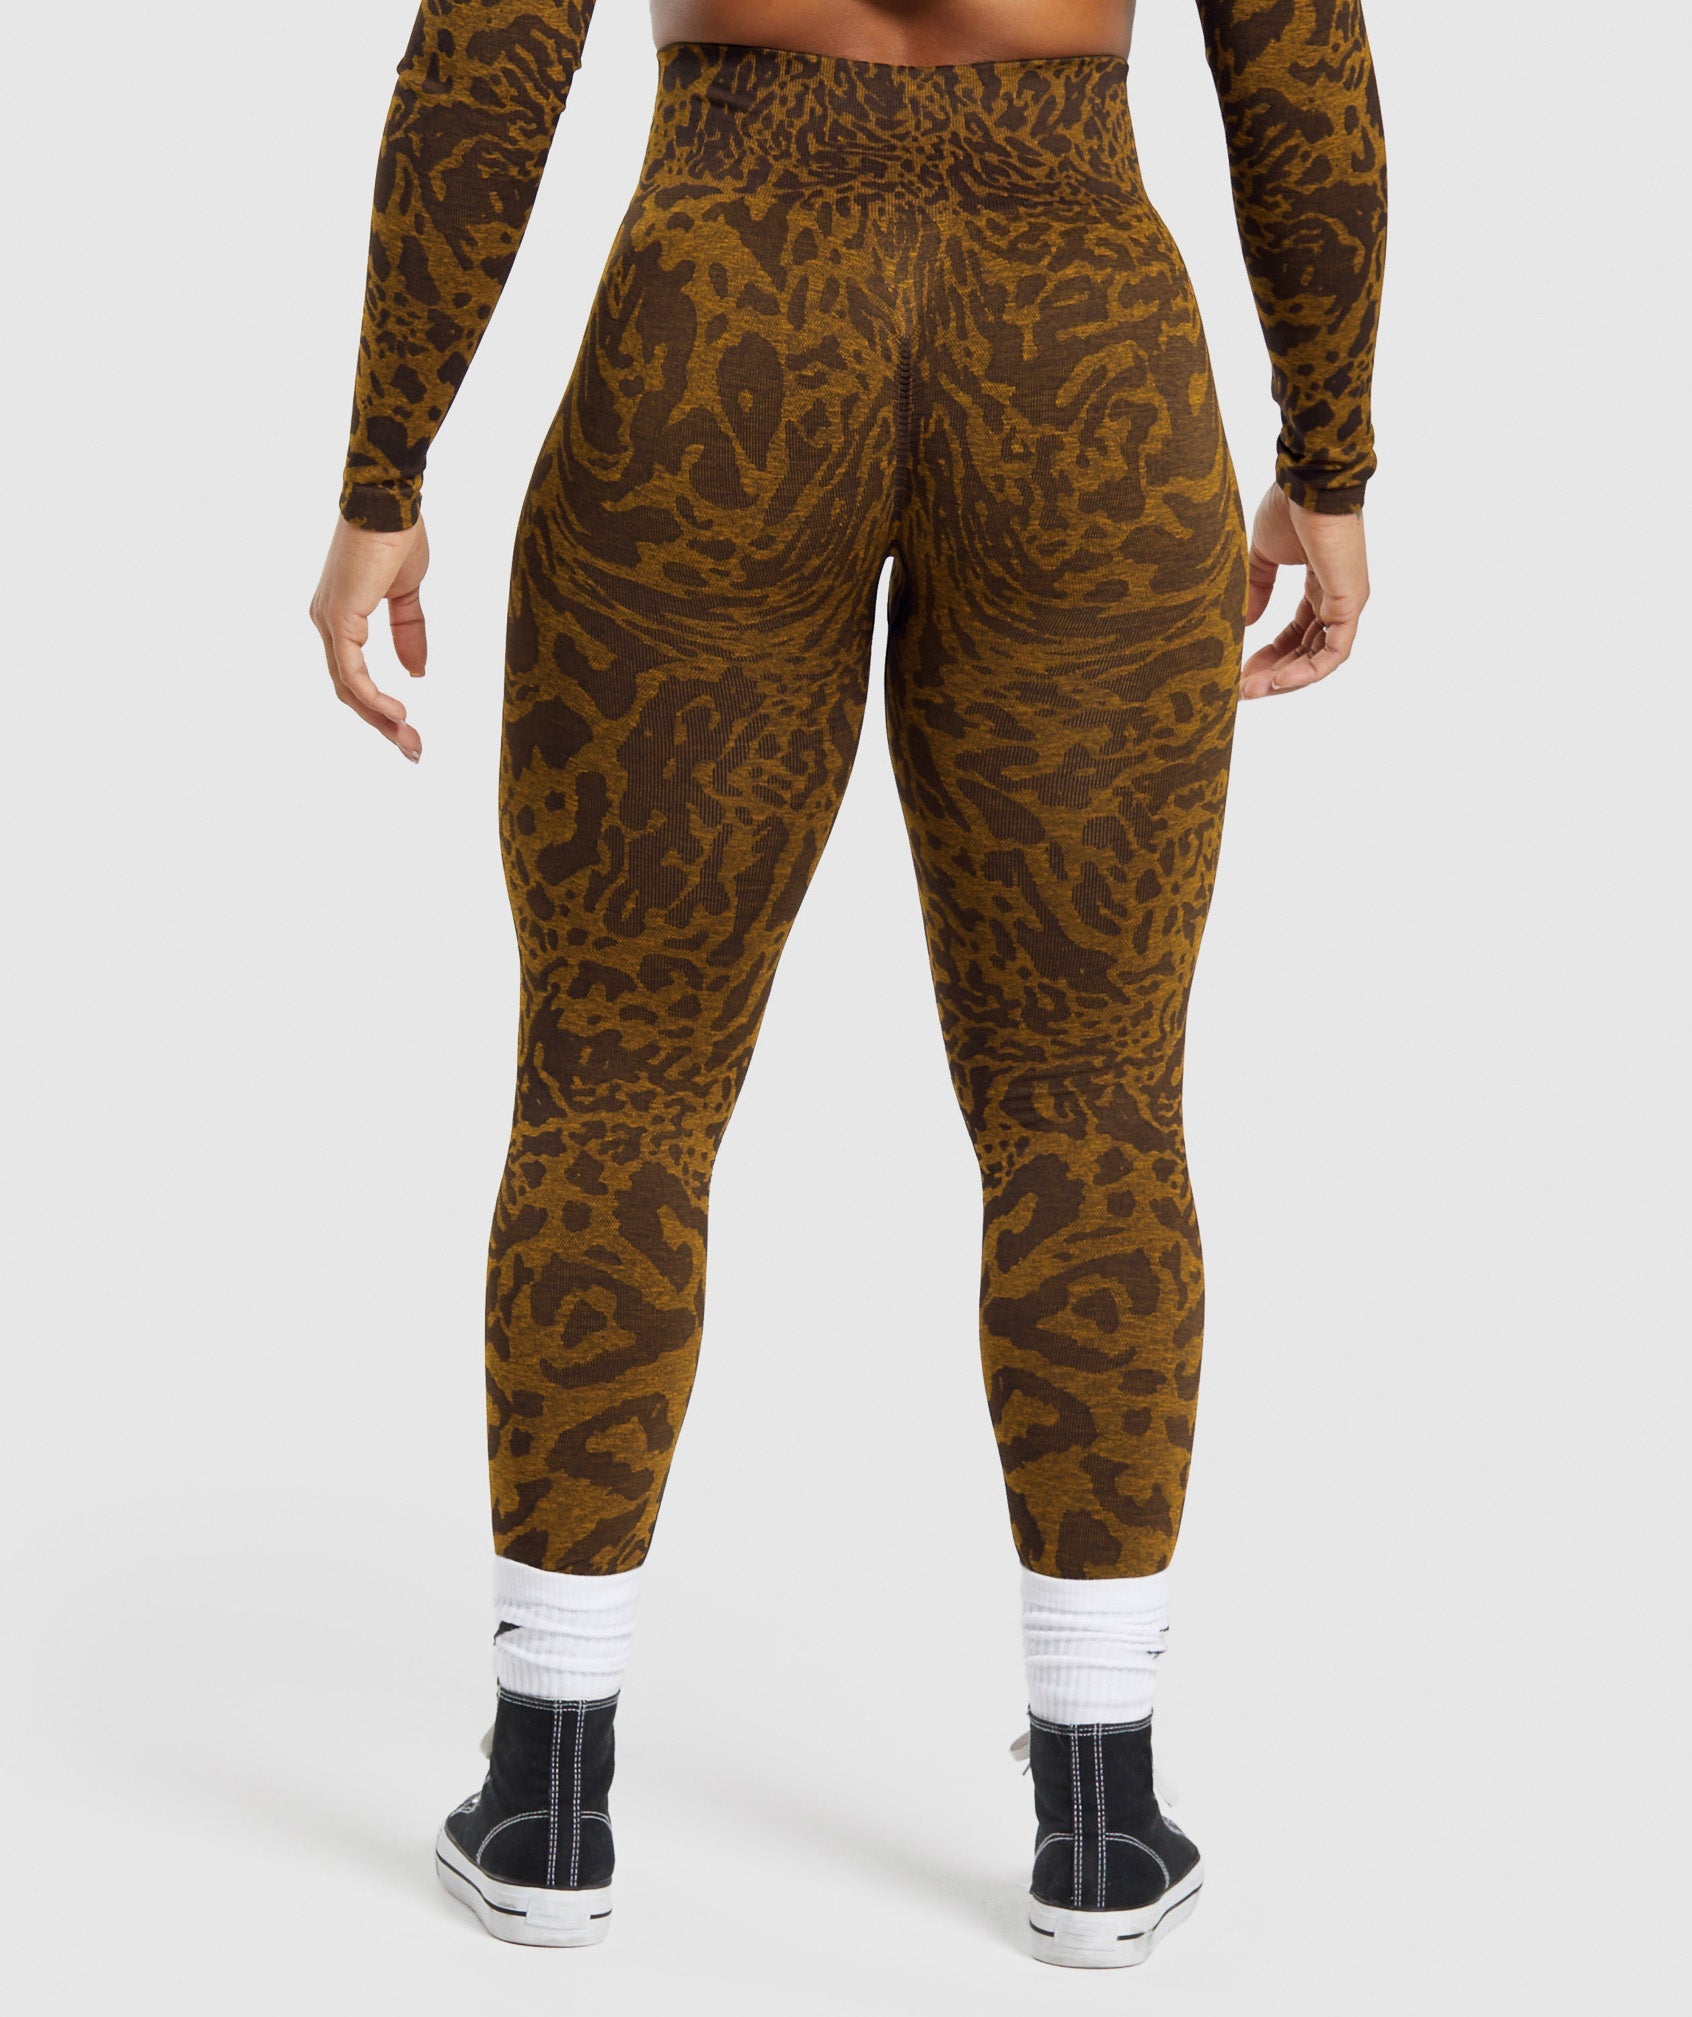 St Day Leopard Jaguar Brown Flare Yoga Pants for Women Loose Wide